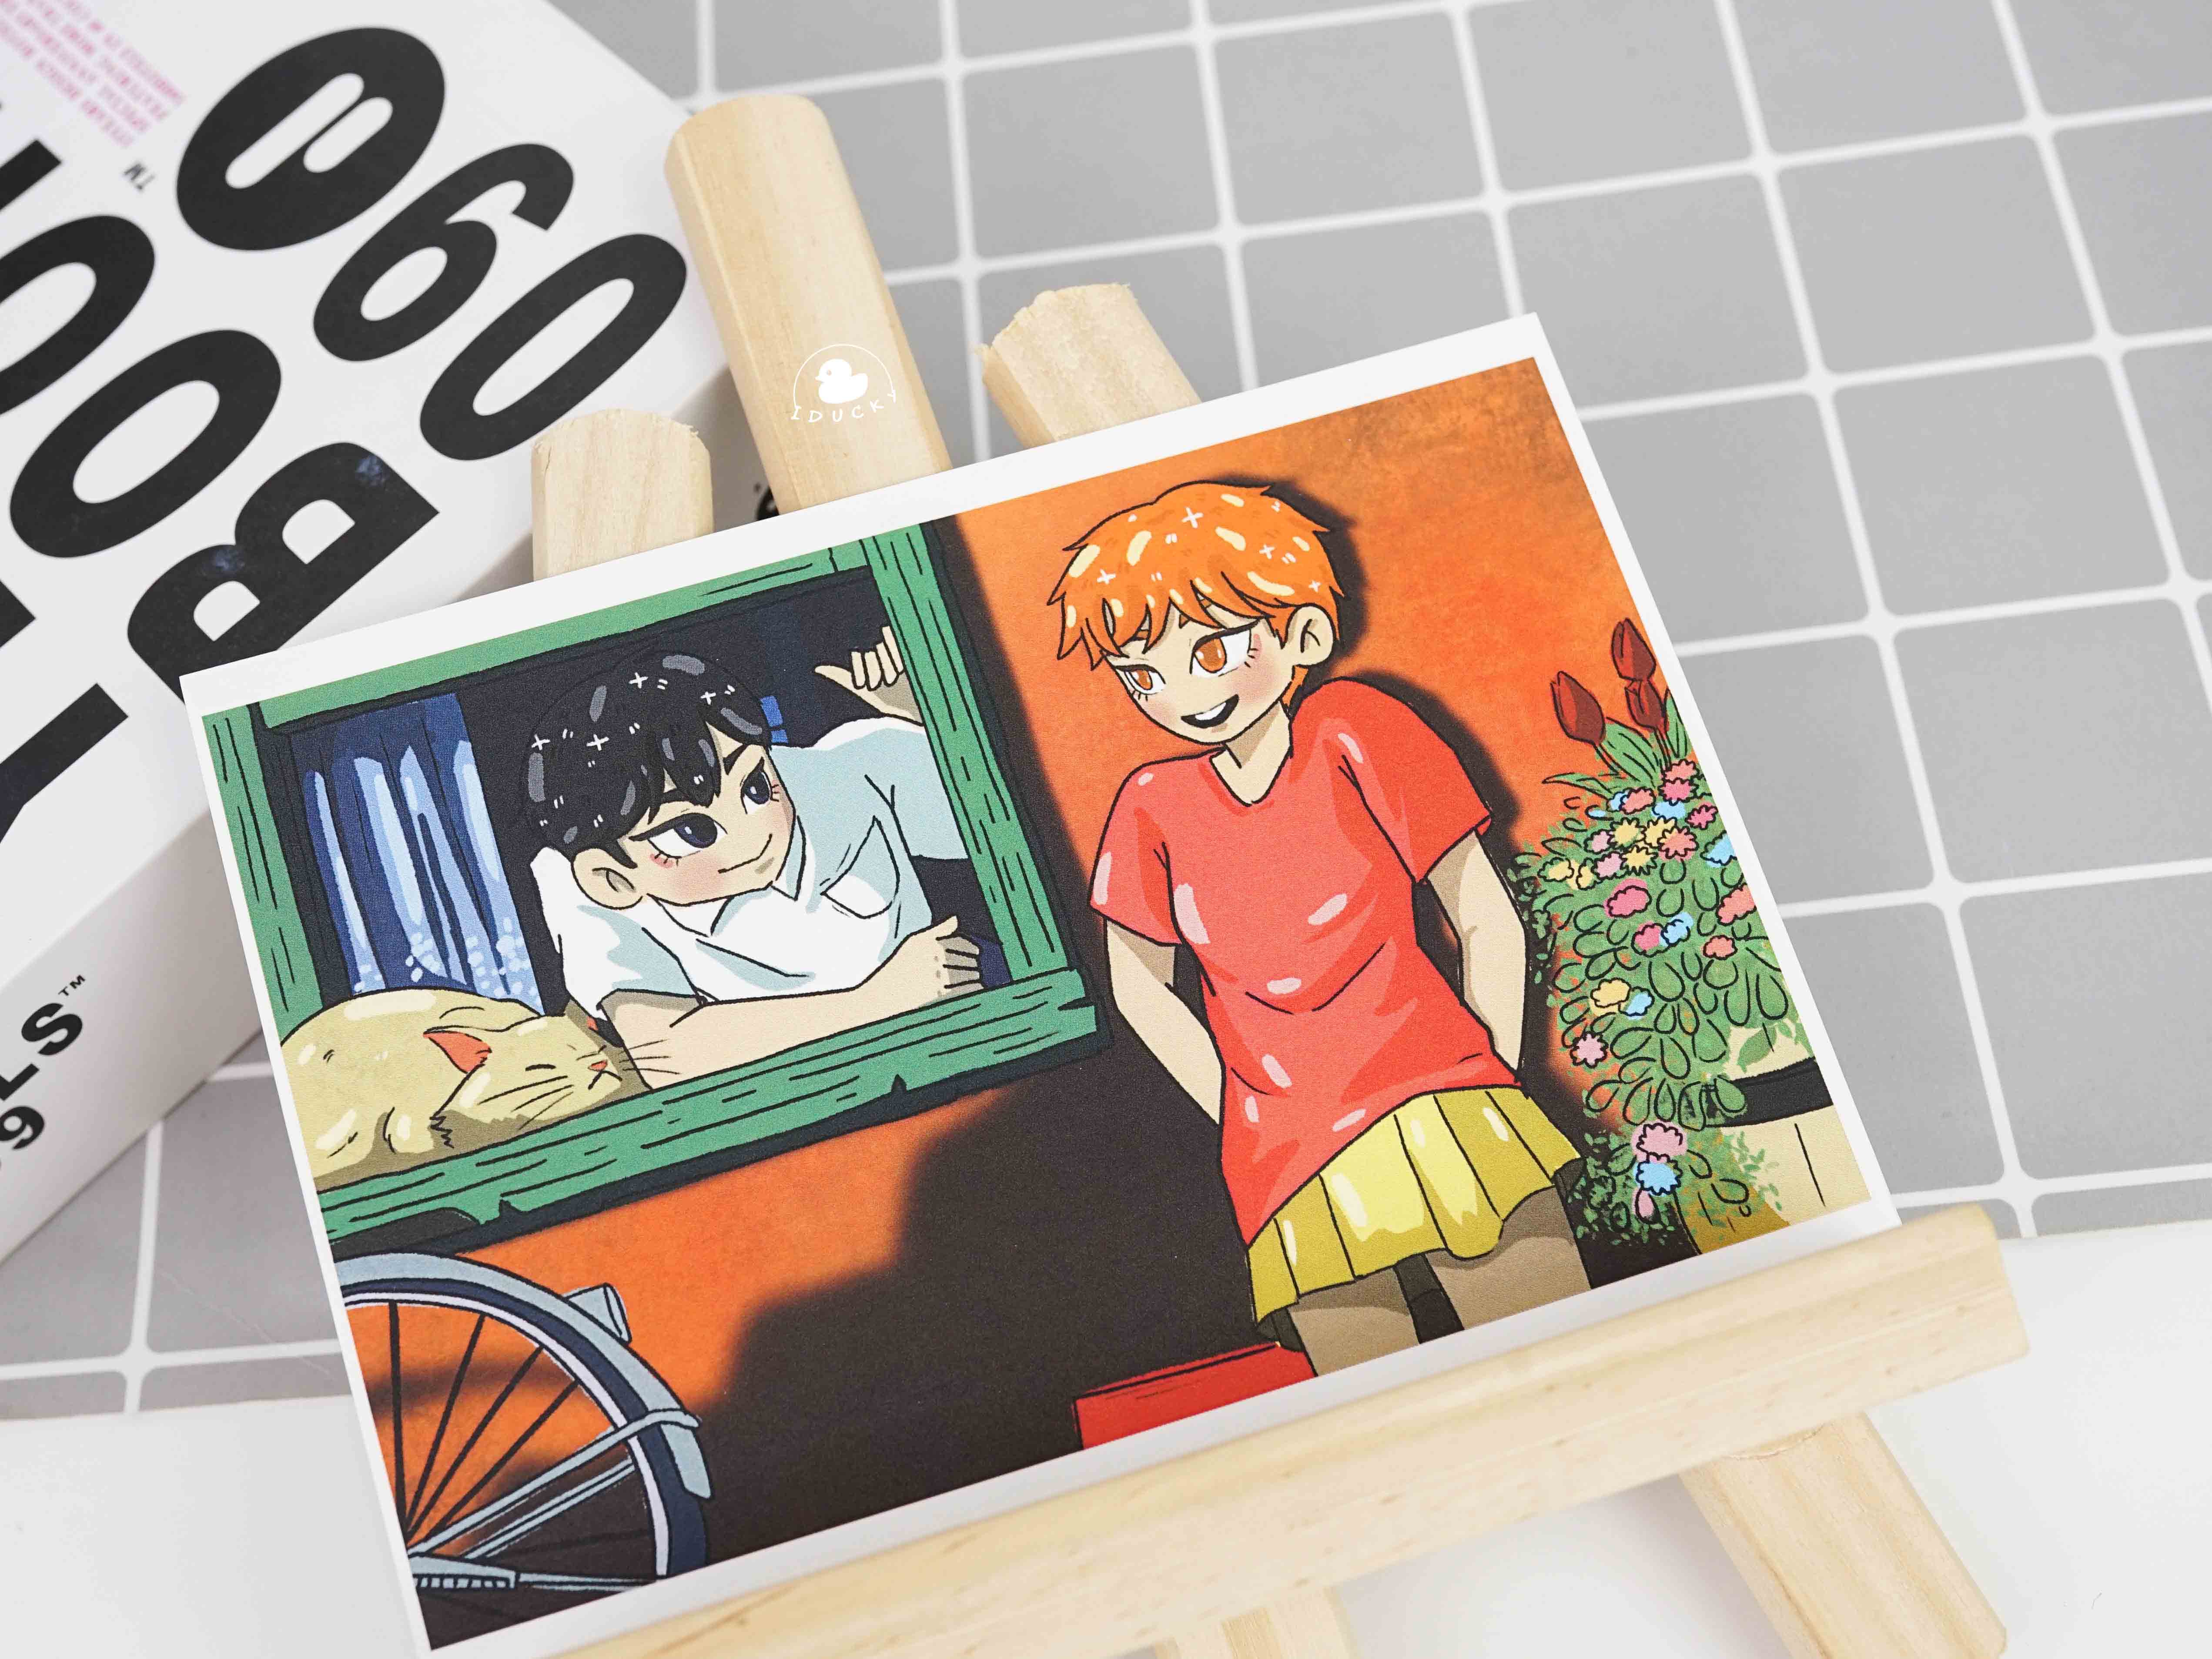 Postcard Ghibli พร้อมส่ง